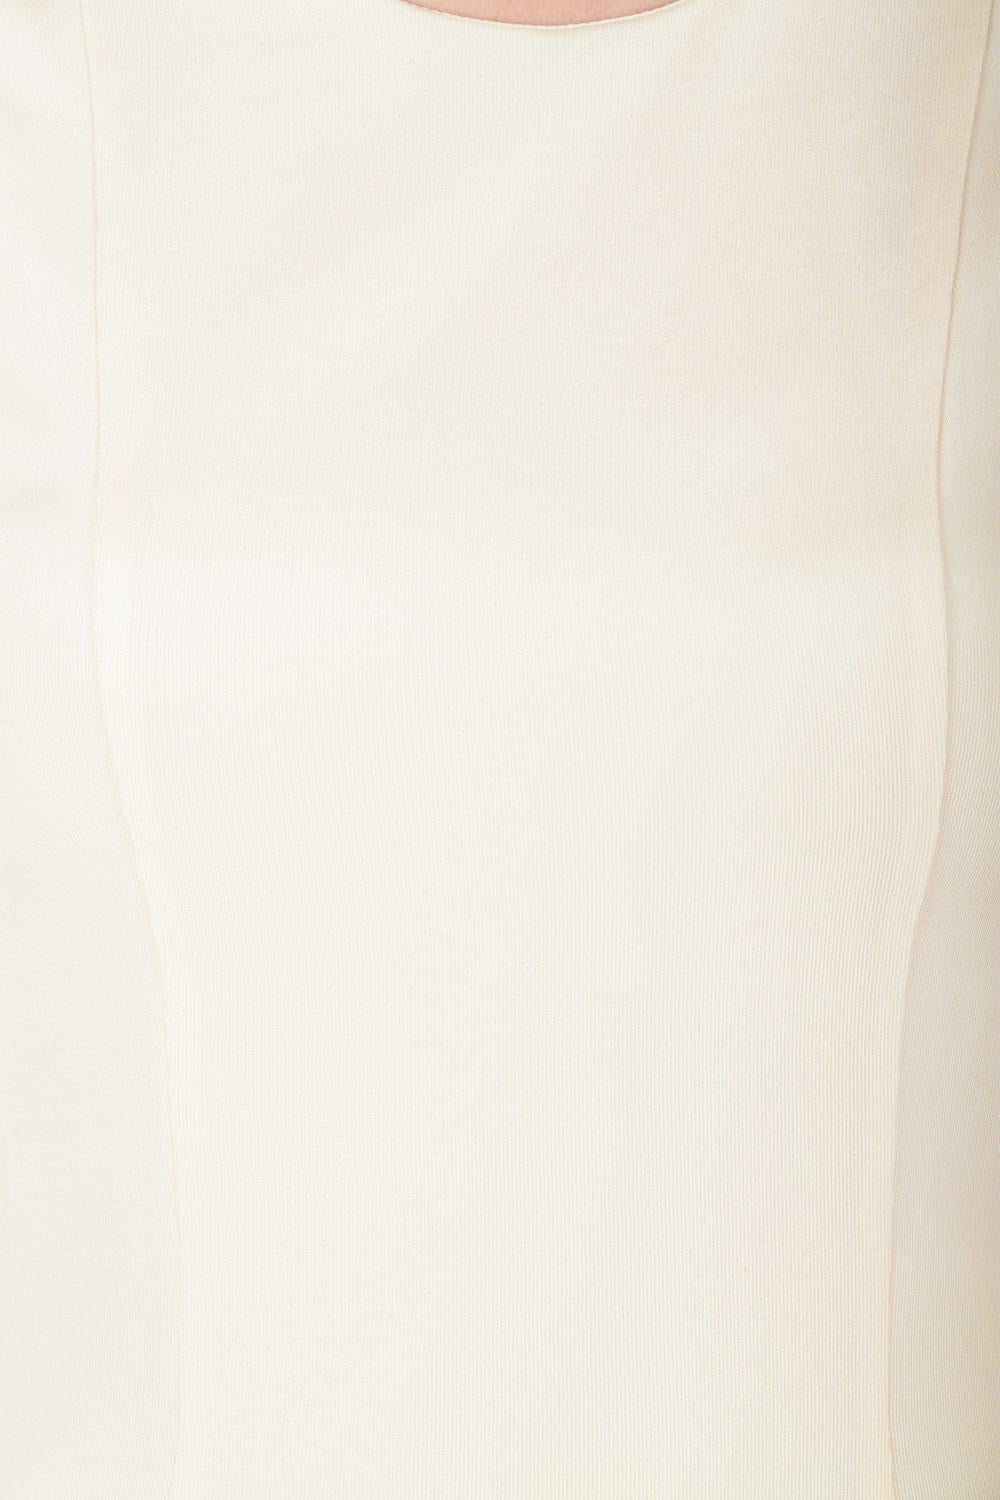 Versace Cream Knit Rose Gold Medusa Button Detail Sleeveless Fitted Dress M 2